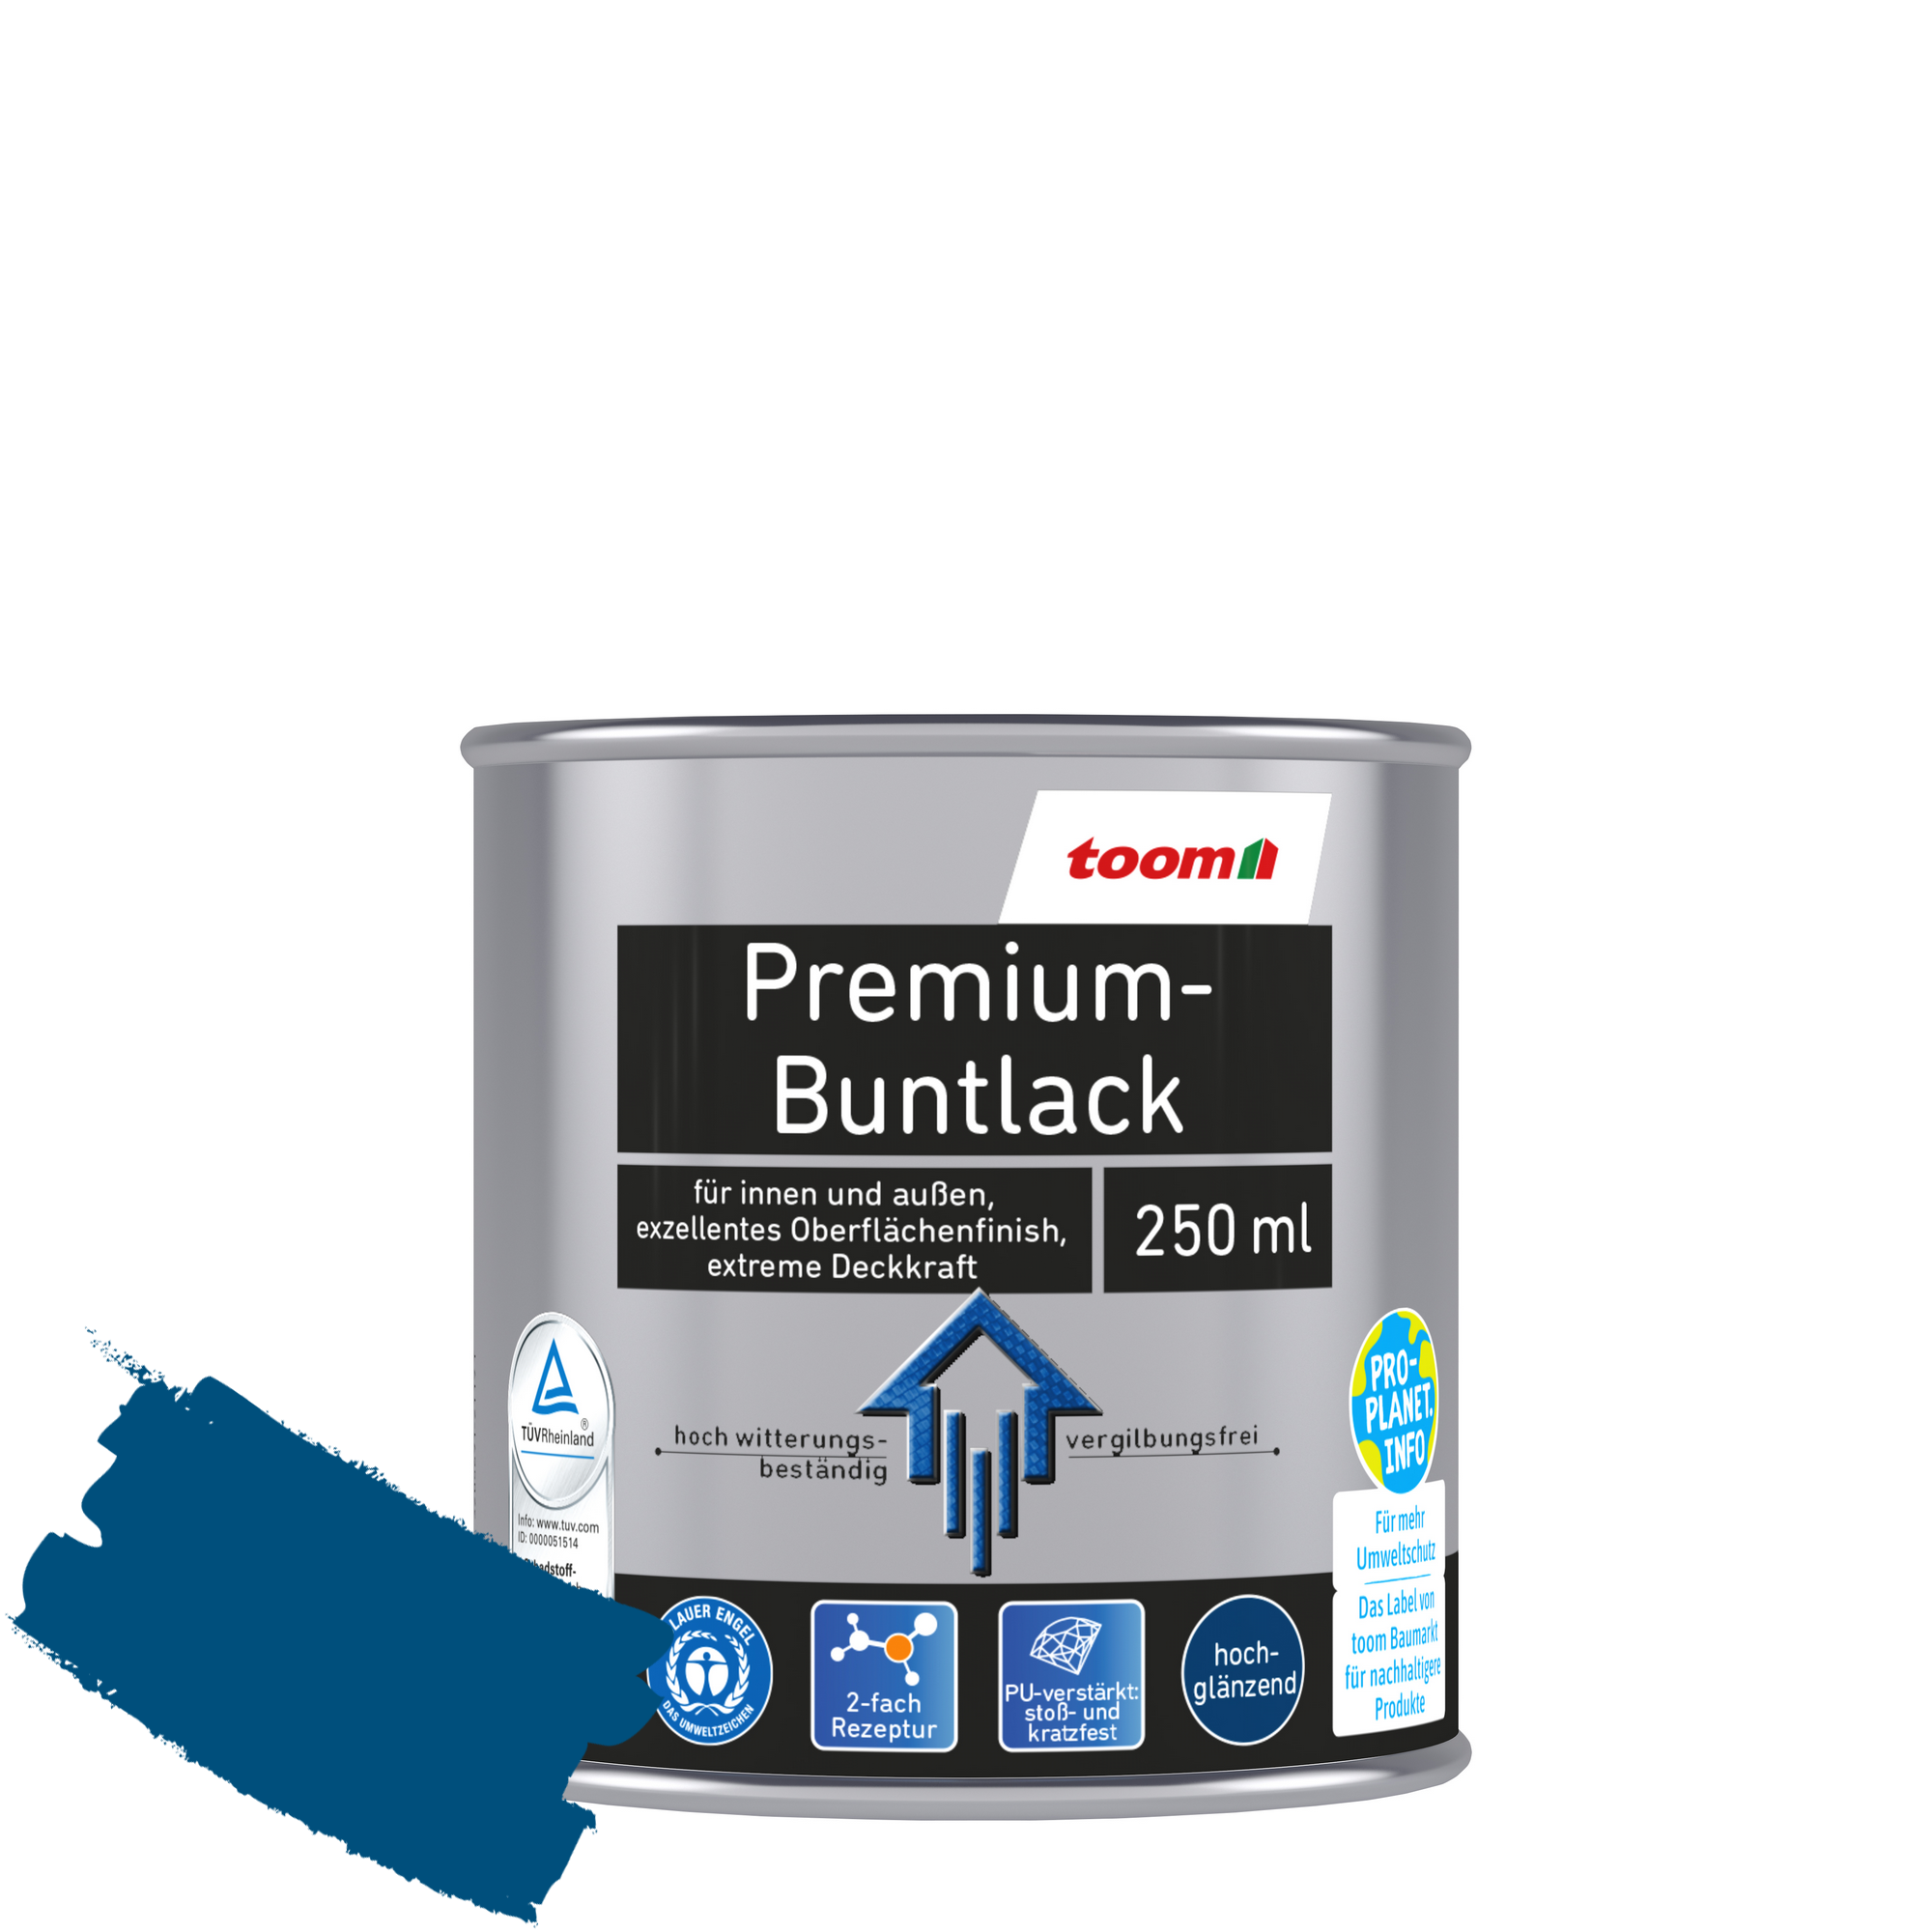 Premium-Buntlack enzianblau glänzend 250 ml + product picture